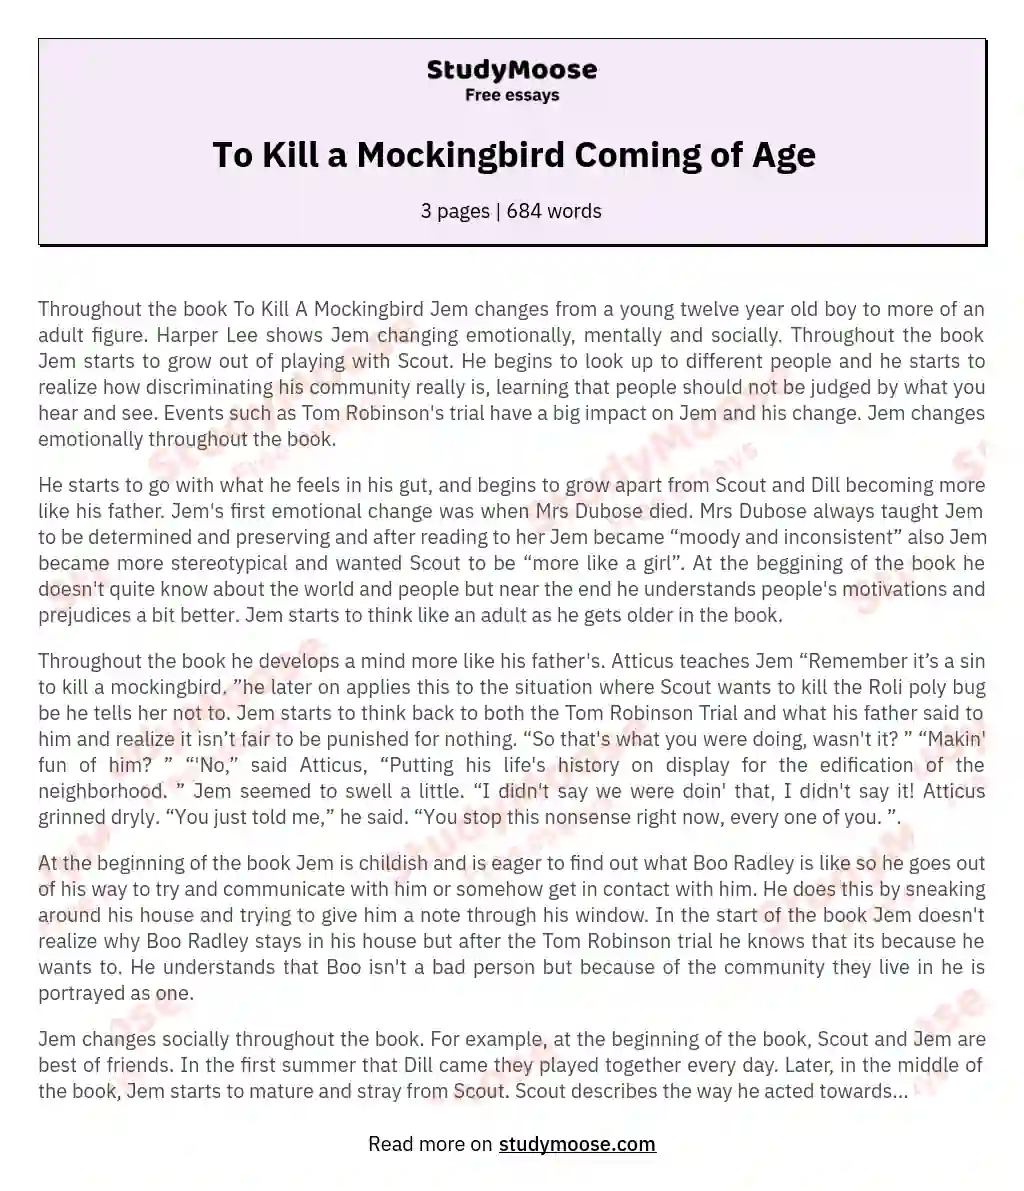 To Kill a Mockingbird Coming of Age essay